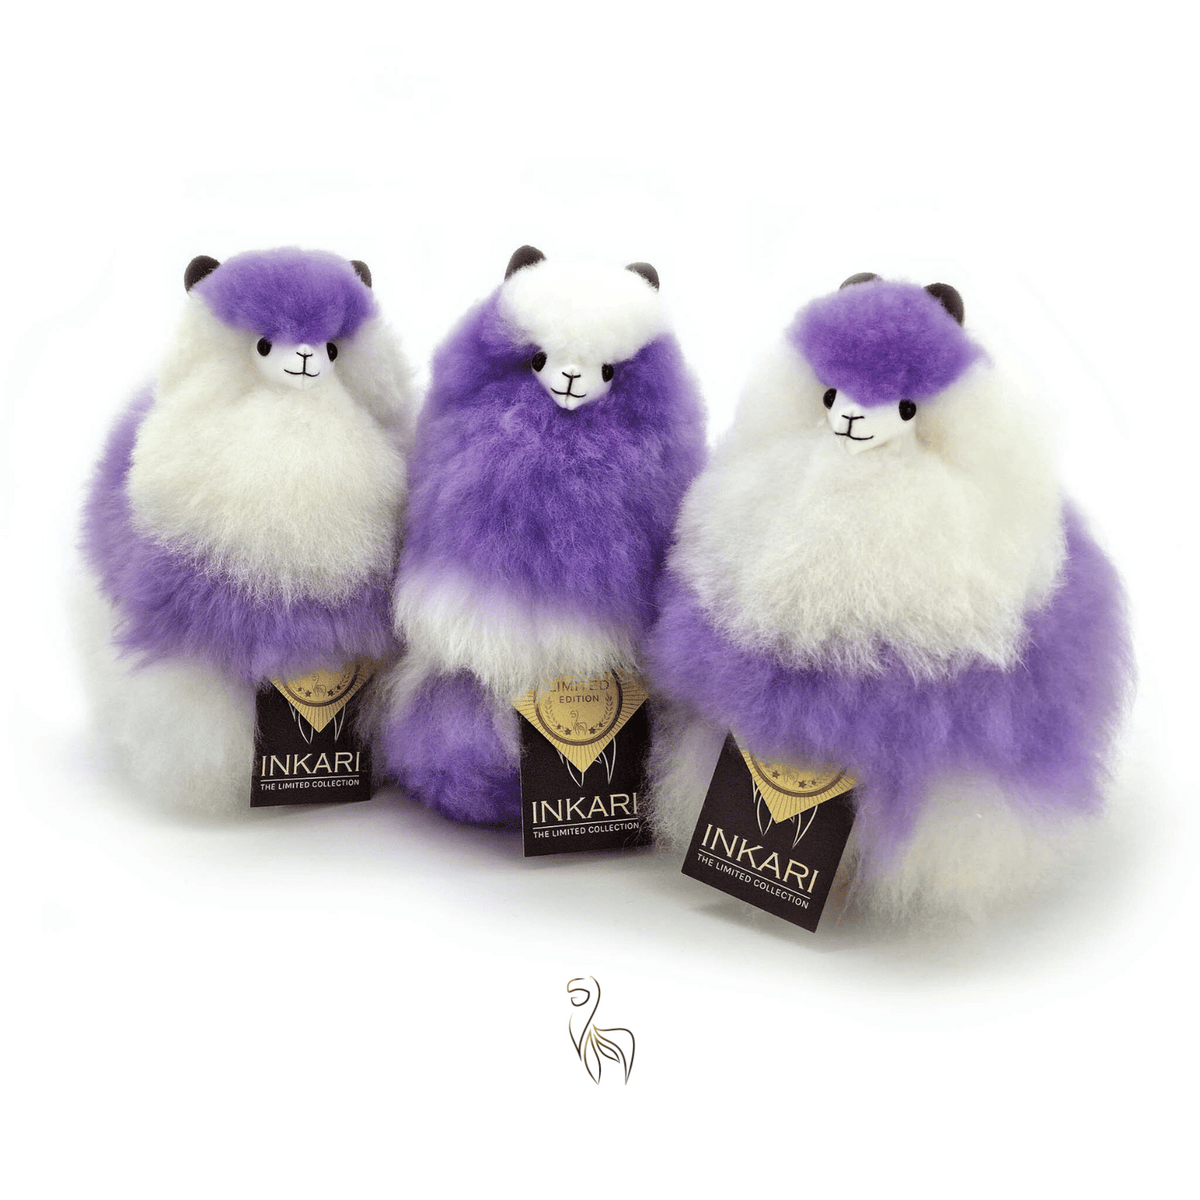 Violet Crocus - Small Alpaca Toy (23cm) - Limited Edition